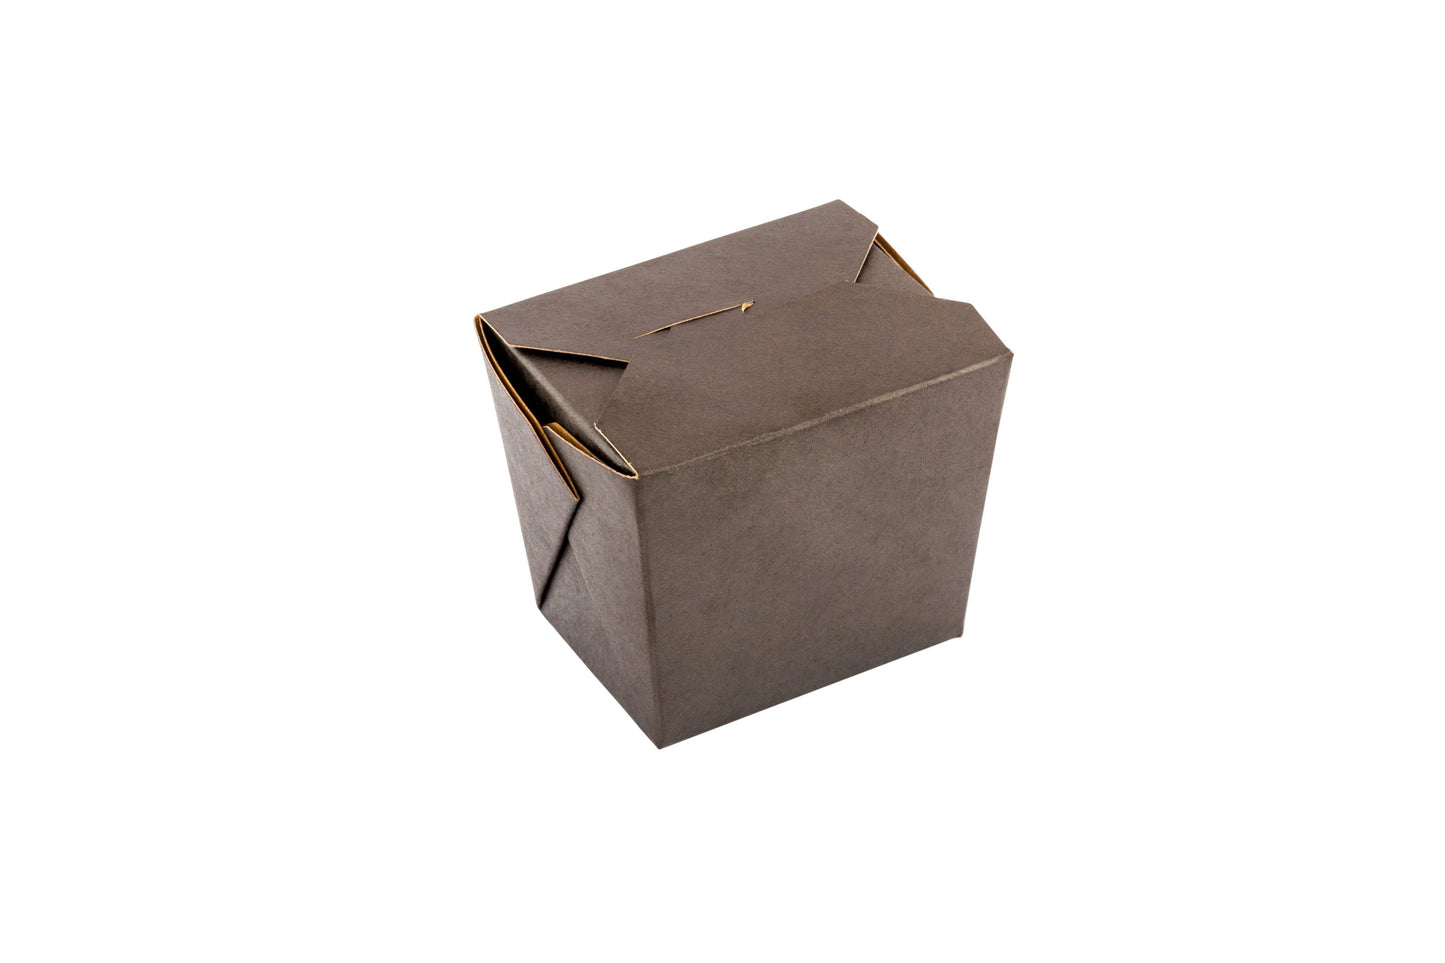 Bio Tek 8 oz Black Paper Square Noodle Take Out Container - 2 3/4" x 2 1/4" x 2 1/2" - 200 count box